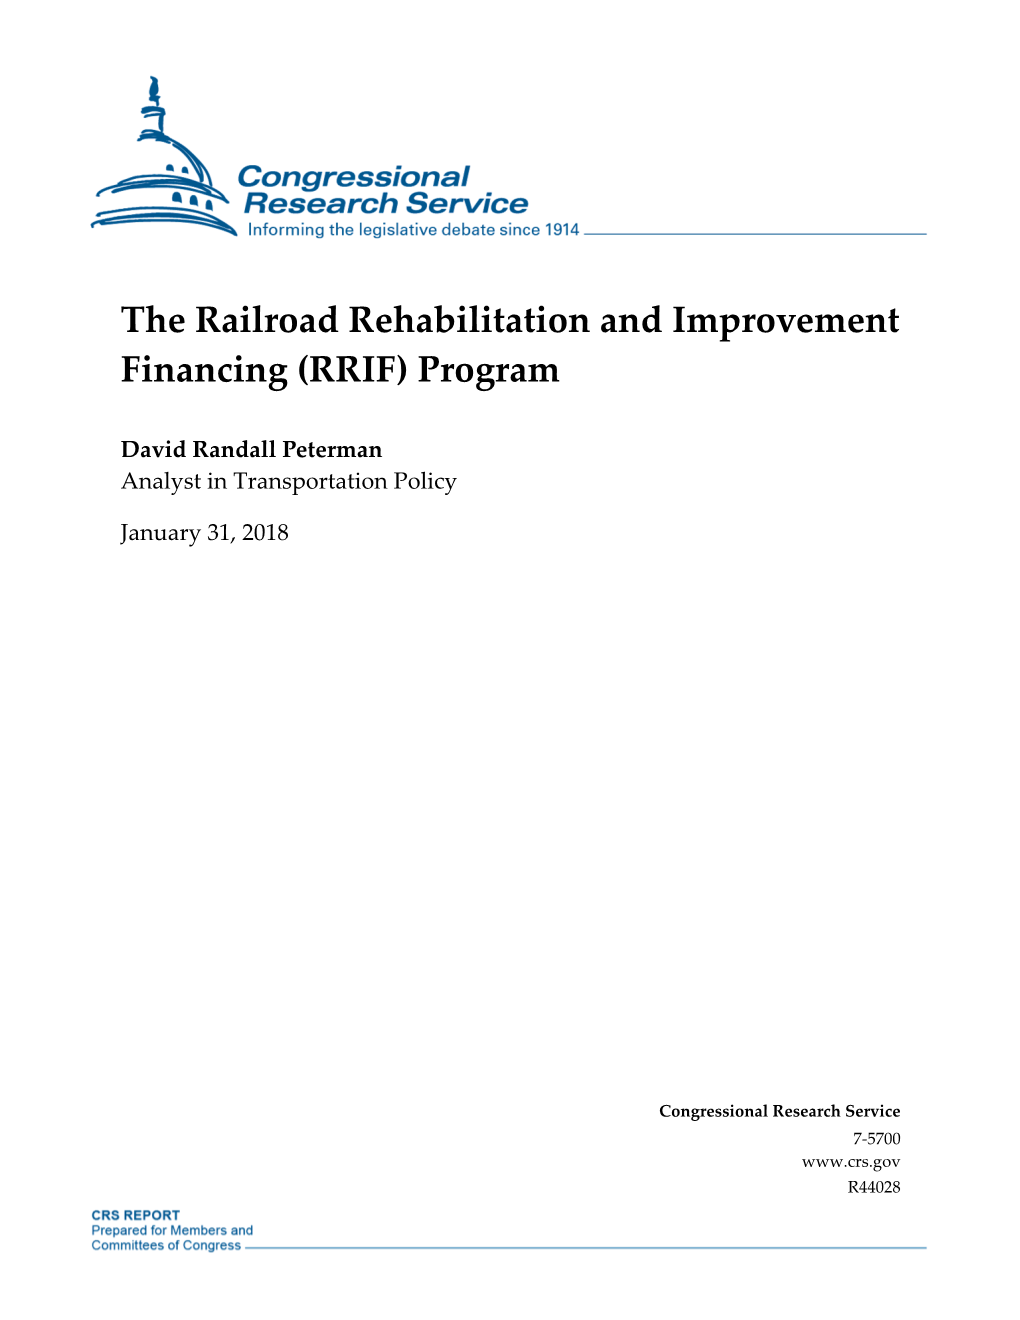 The Railroad Rehabilitation and Improvement Financing (RRIF) Program